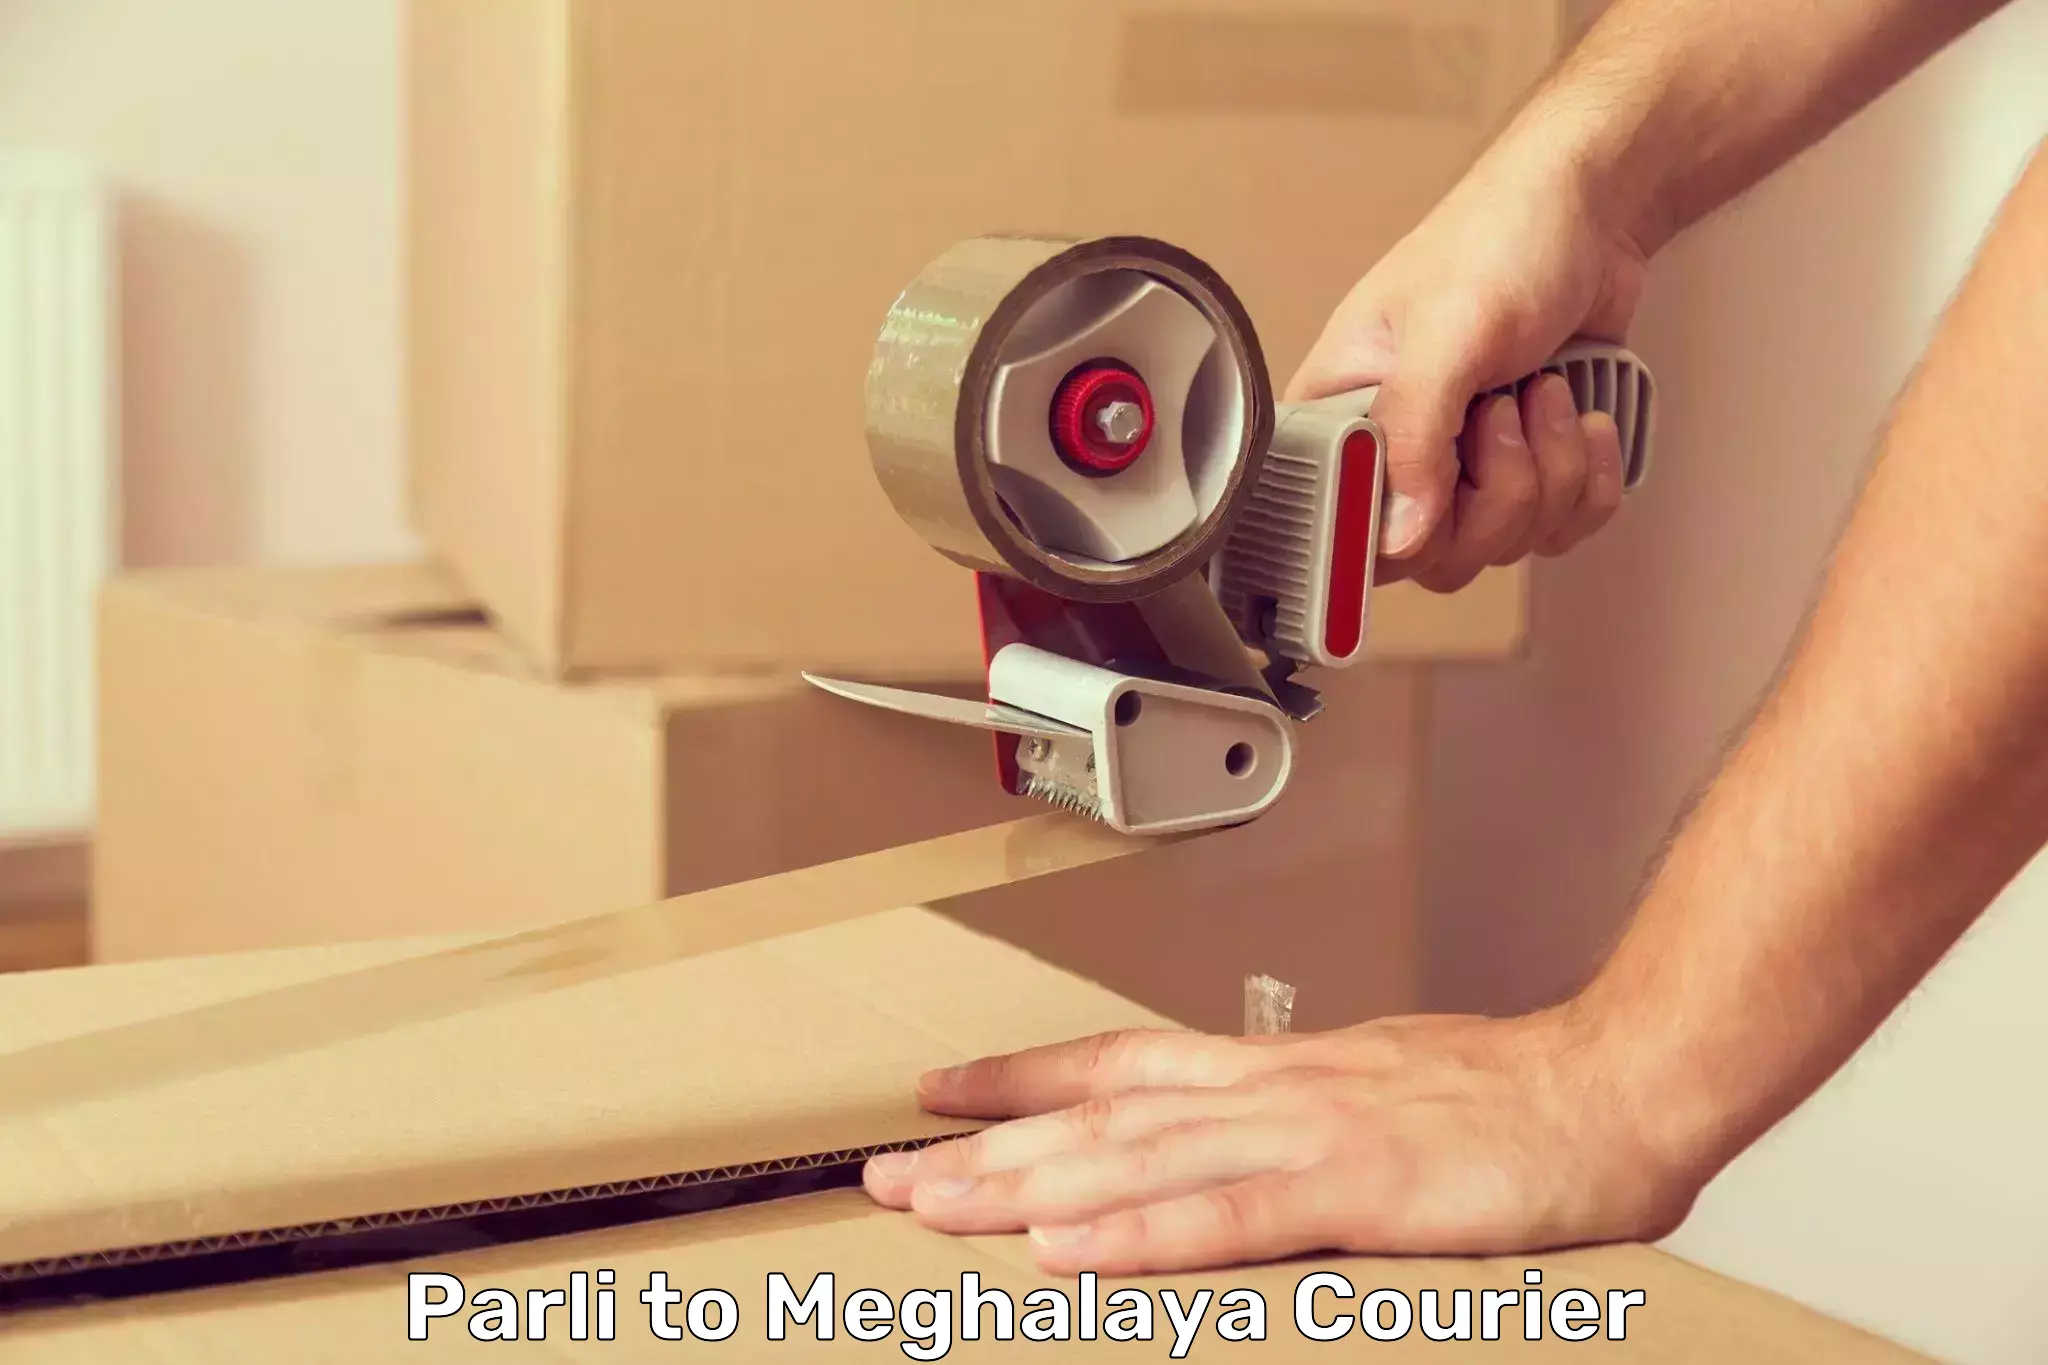 Individual parcel service Parli to Meghalaya